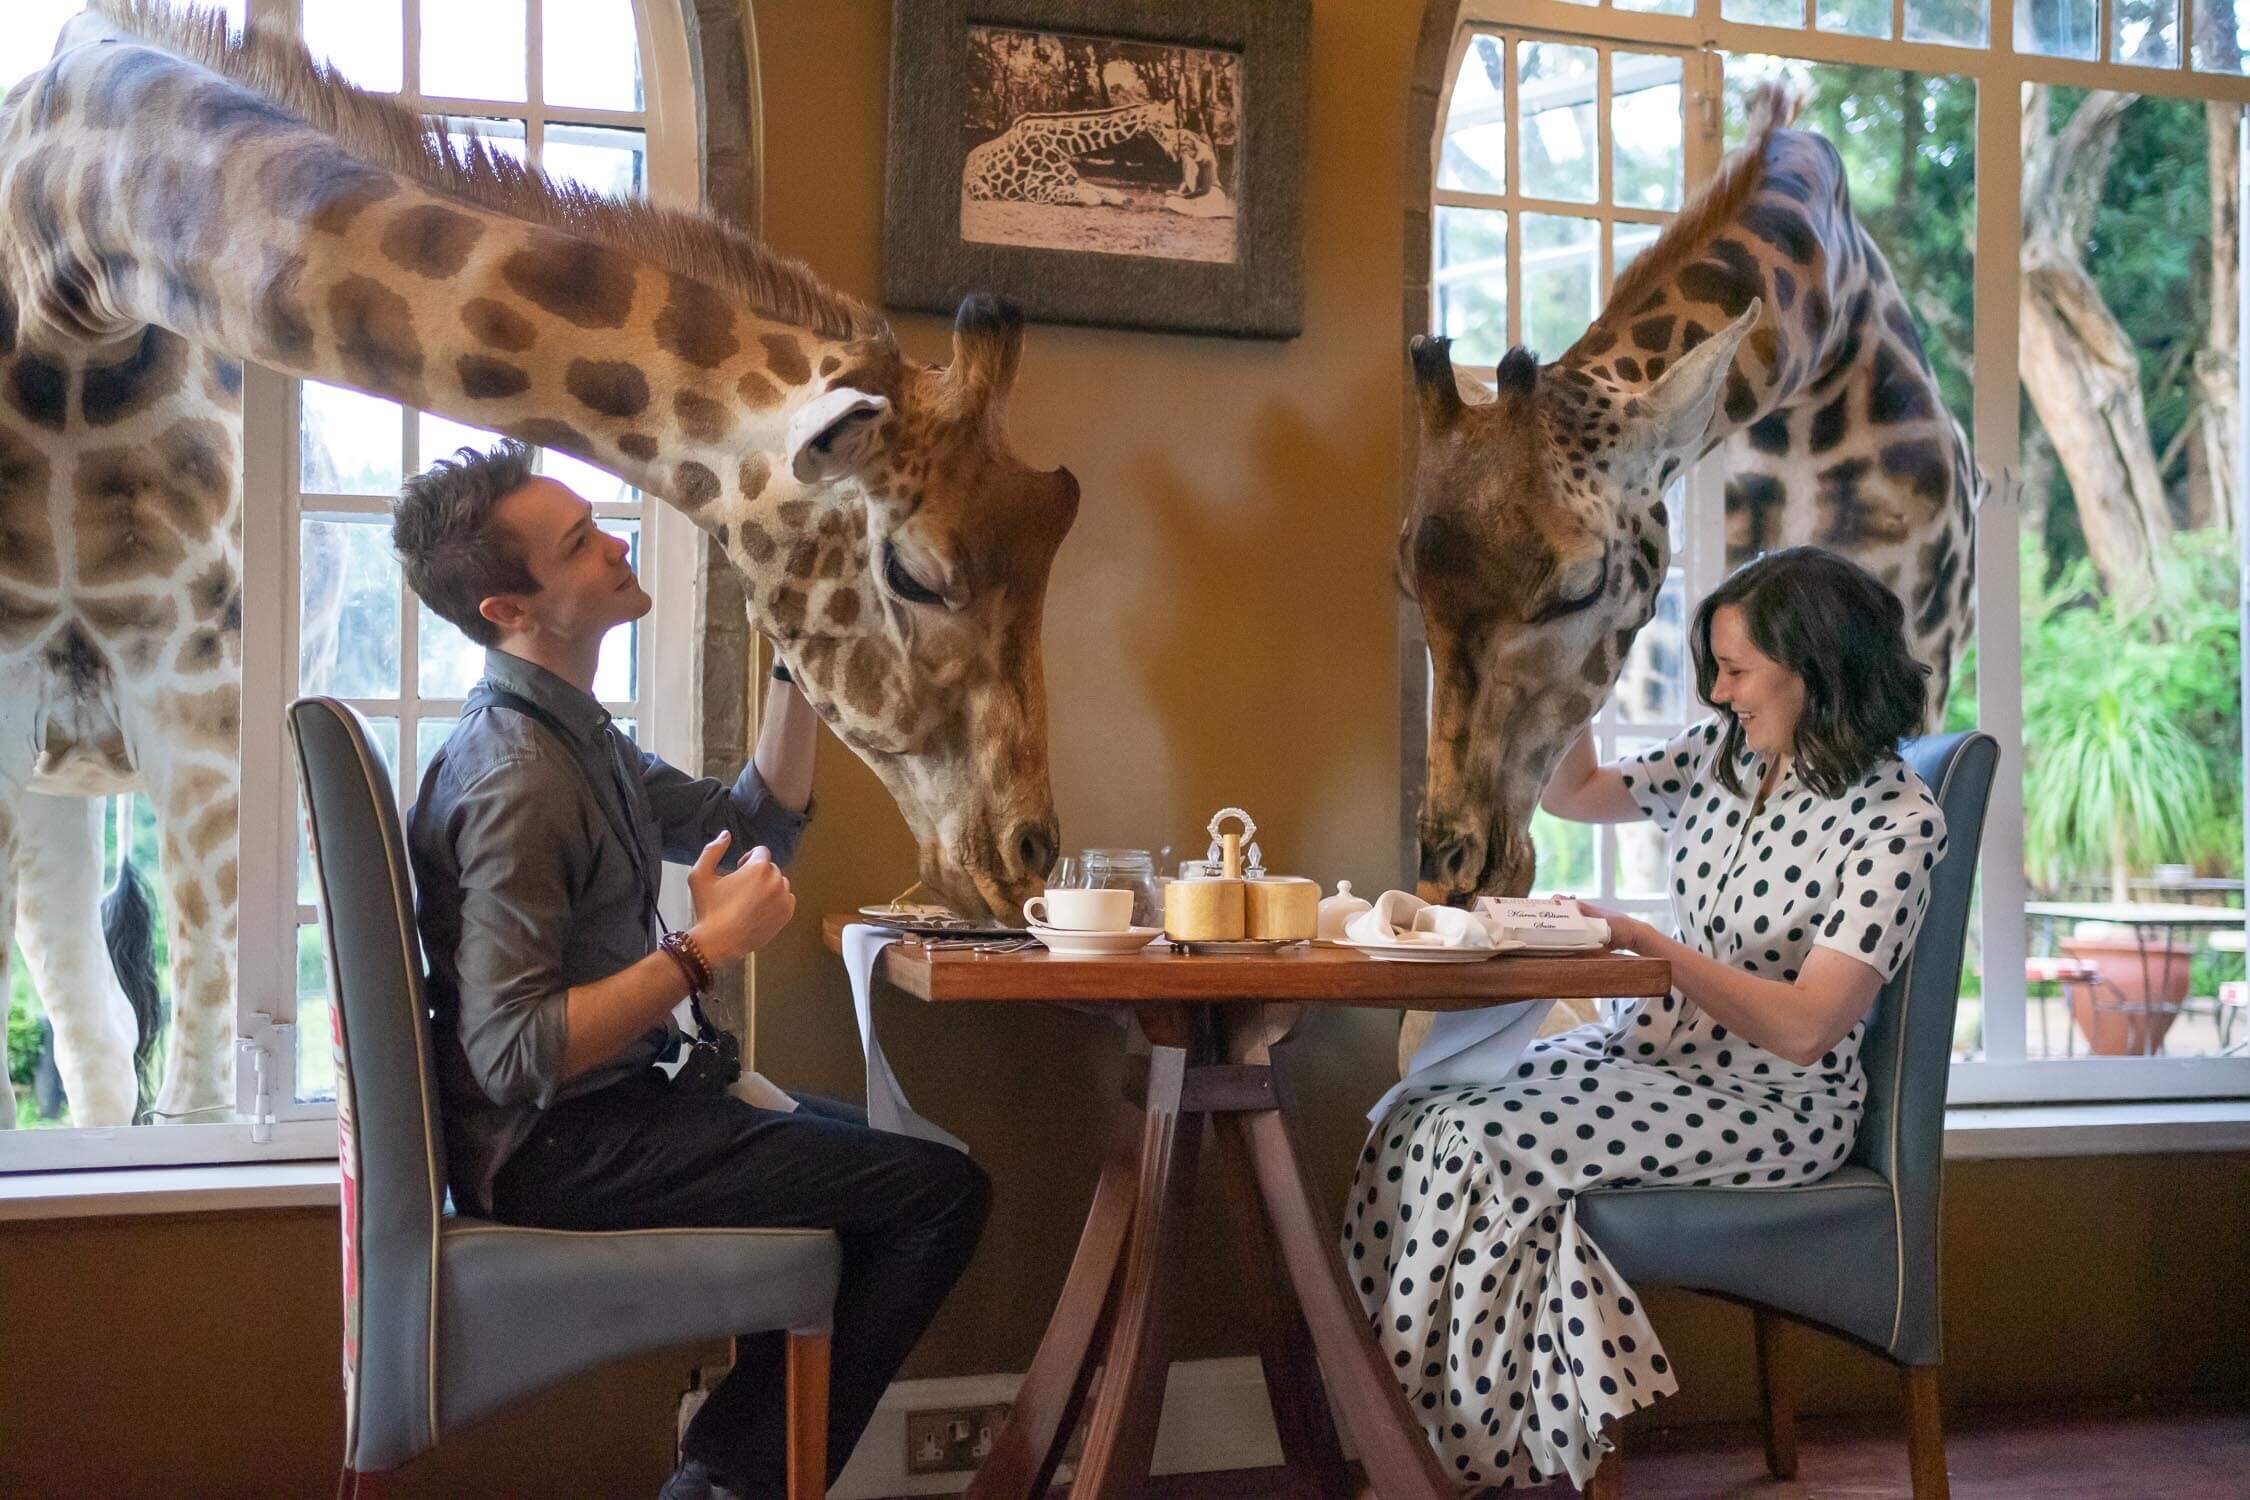 Monica-francis-couple-feeding-giraffes-breakfast-sezane-polka-dot-dress.jpeg